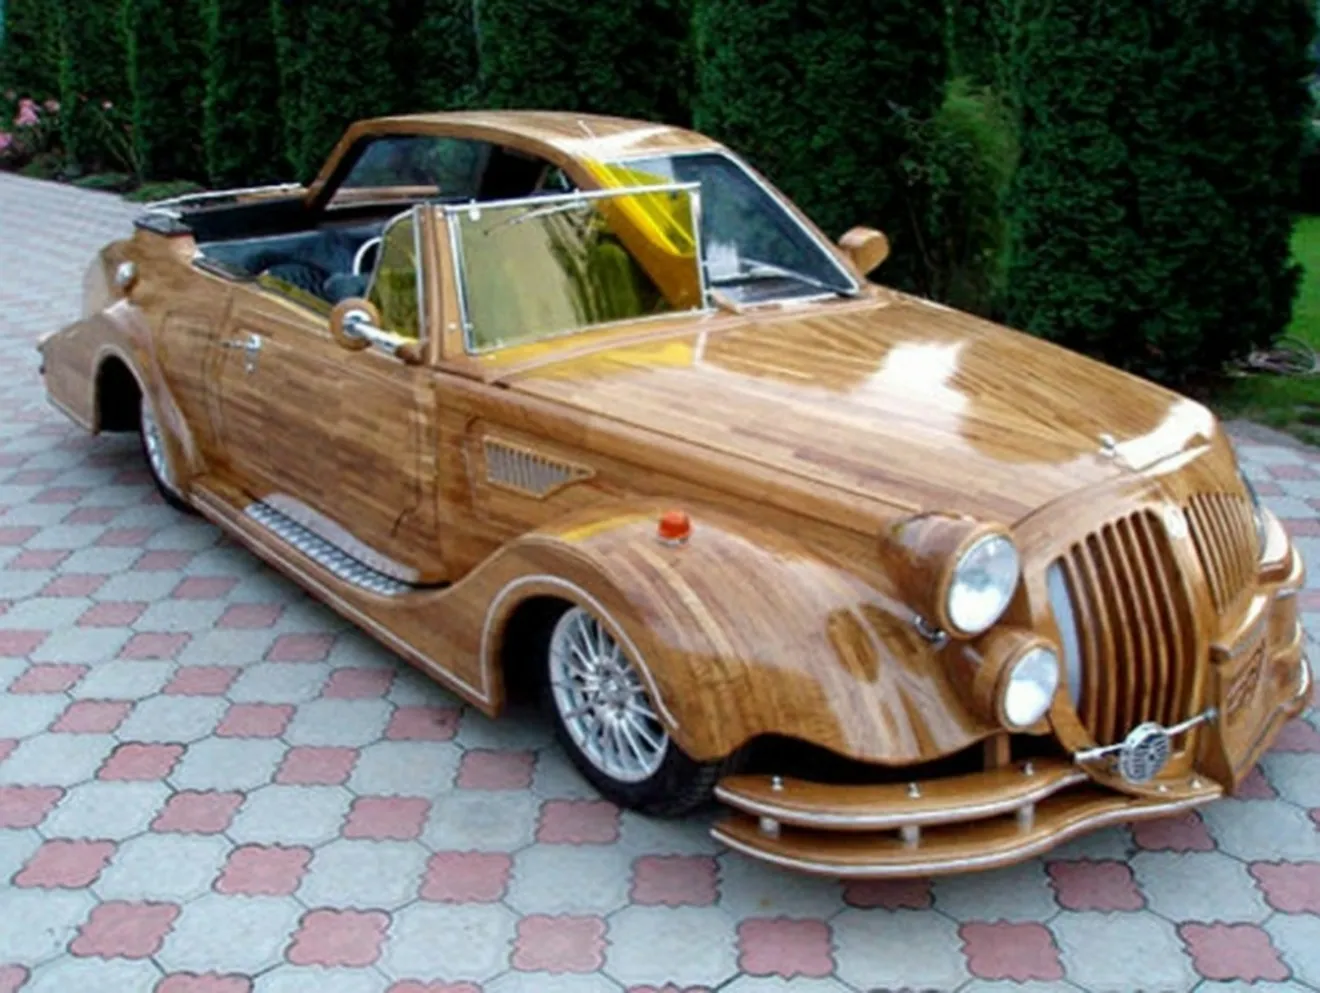 Rareza del día: Un coche de madera con dos diseños